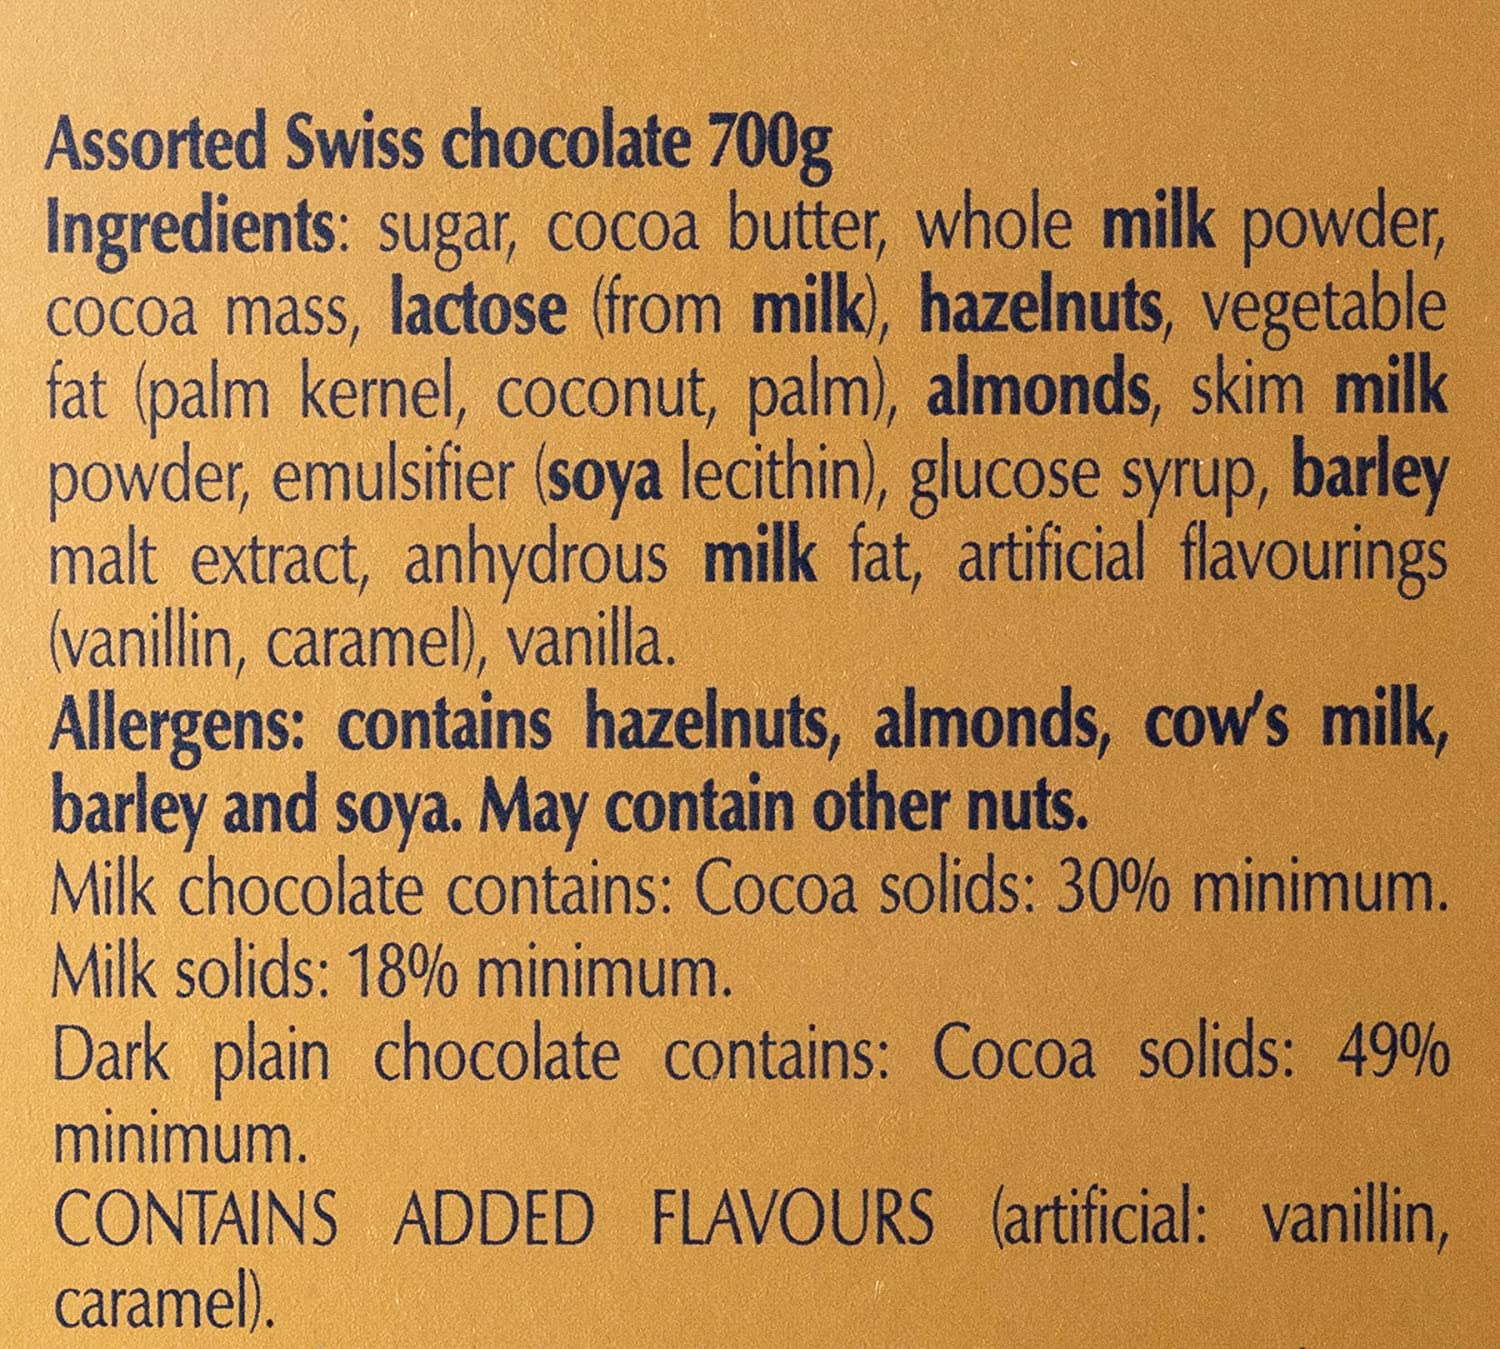 Lindt Swiss chocolate ingredients label.